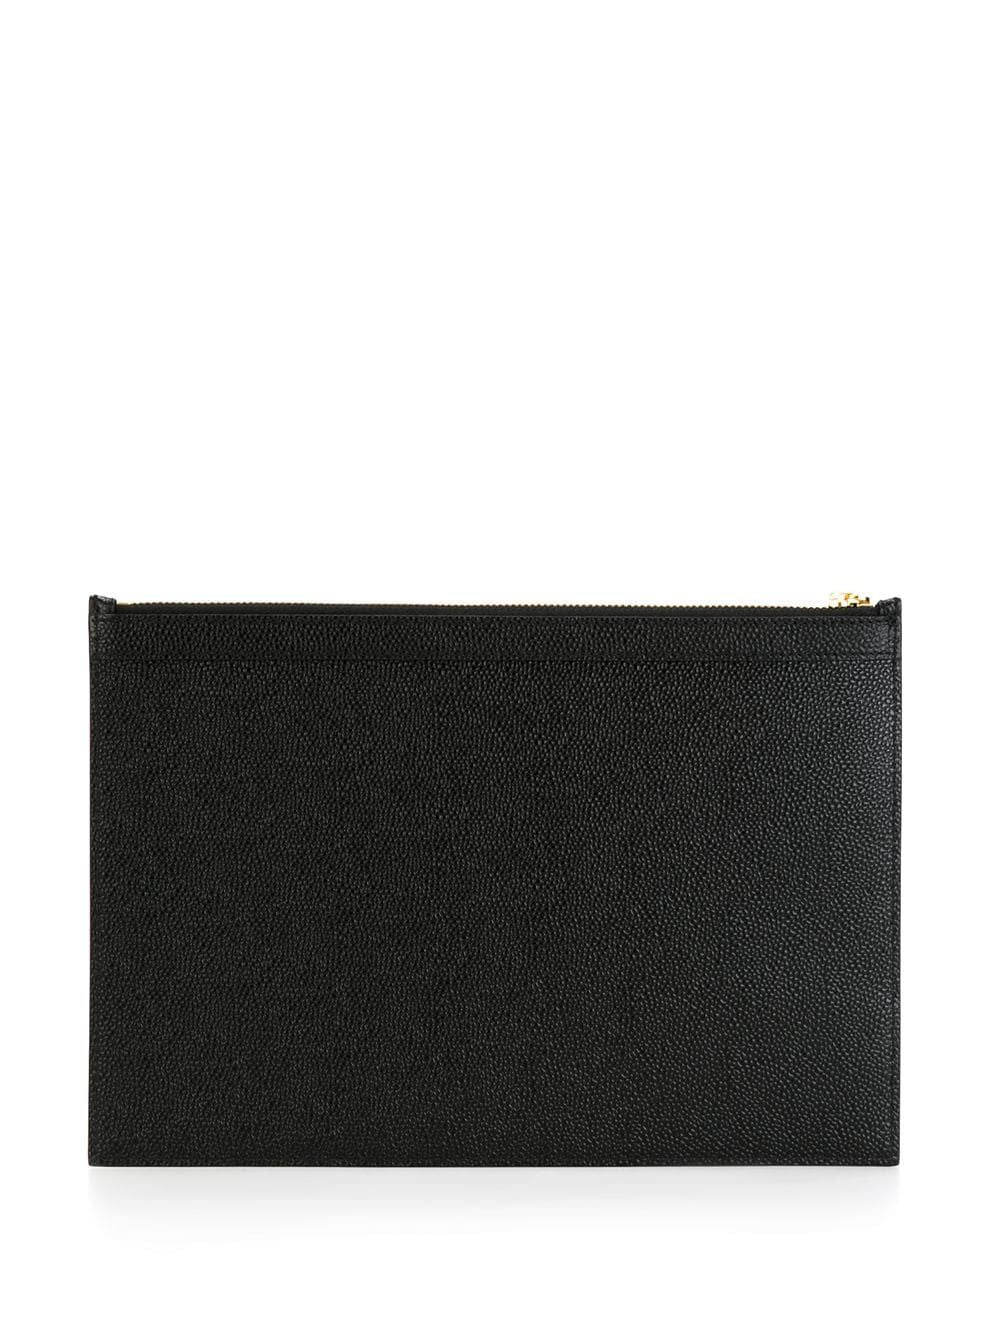 THOM BROWNE Mini Black Pebble Grain Leather Document Holder with Tri-Color Ribbon Detail